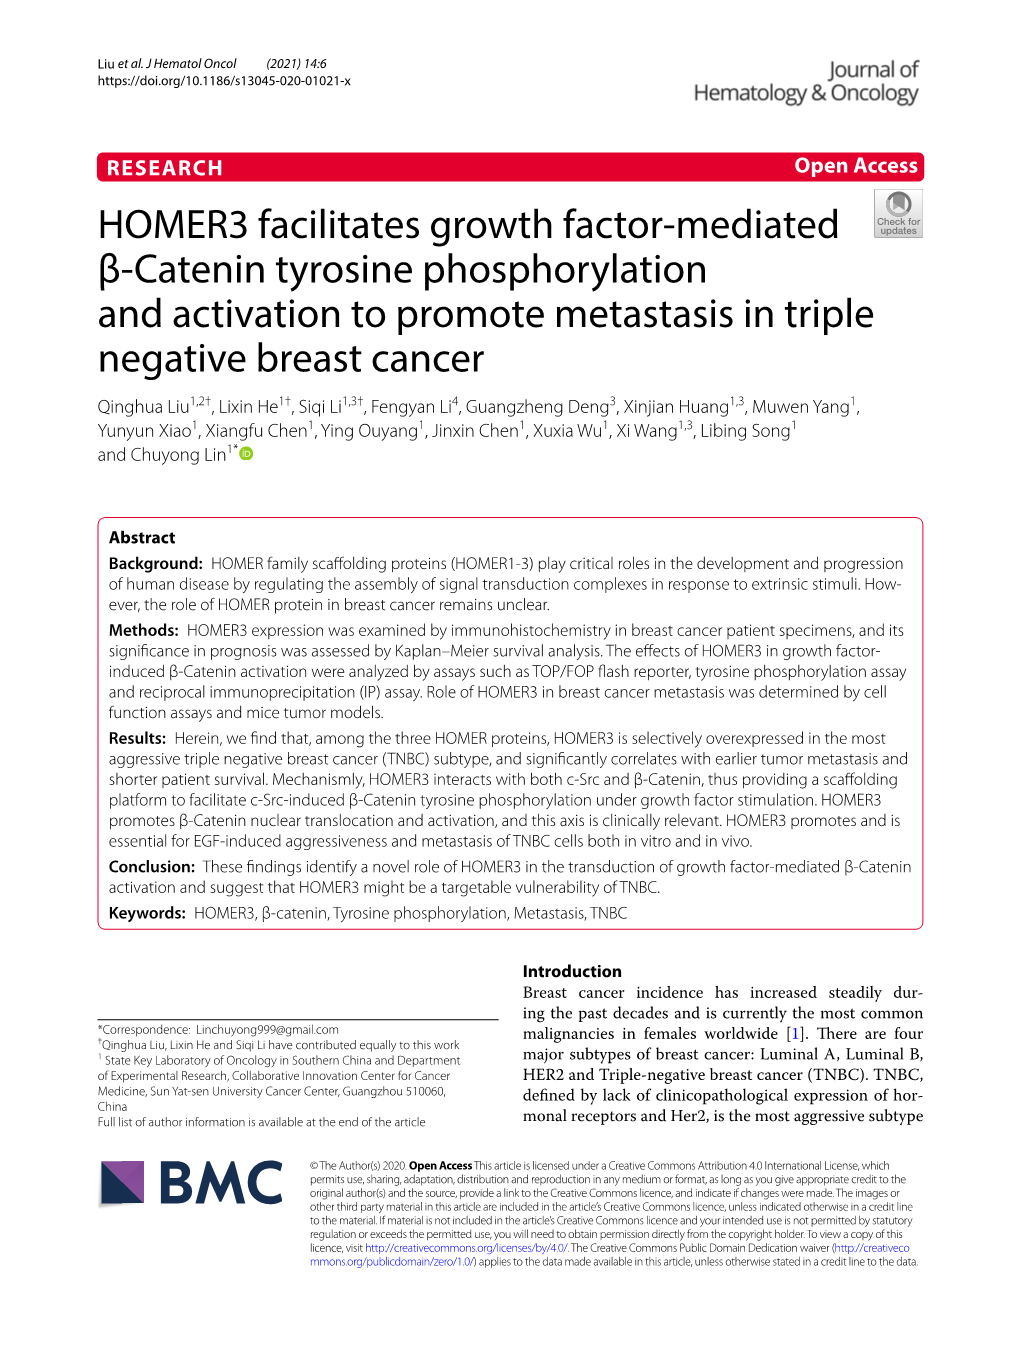 HOMER3 Facilitates Growth Factor-Mediated Β-Catenin Tyrosine